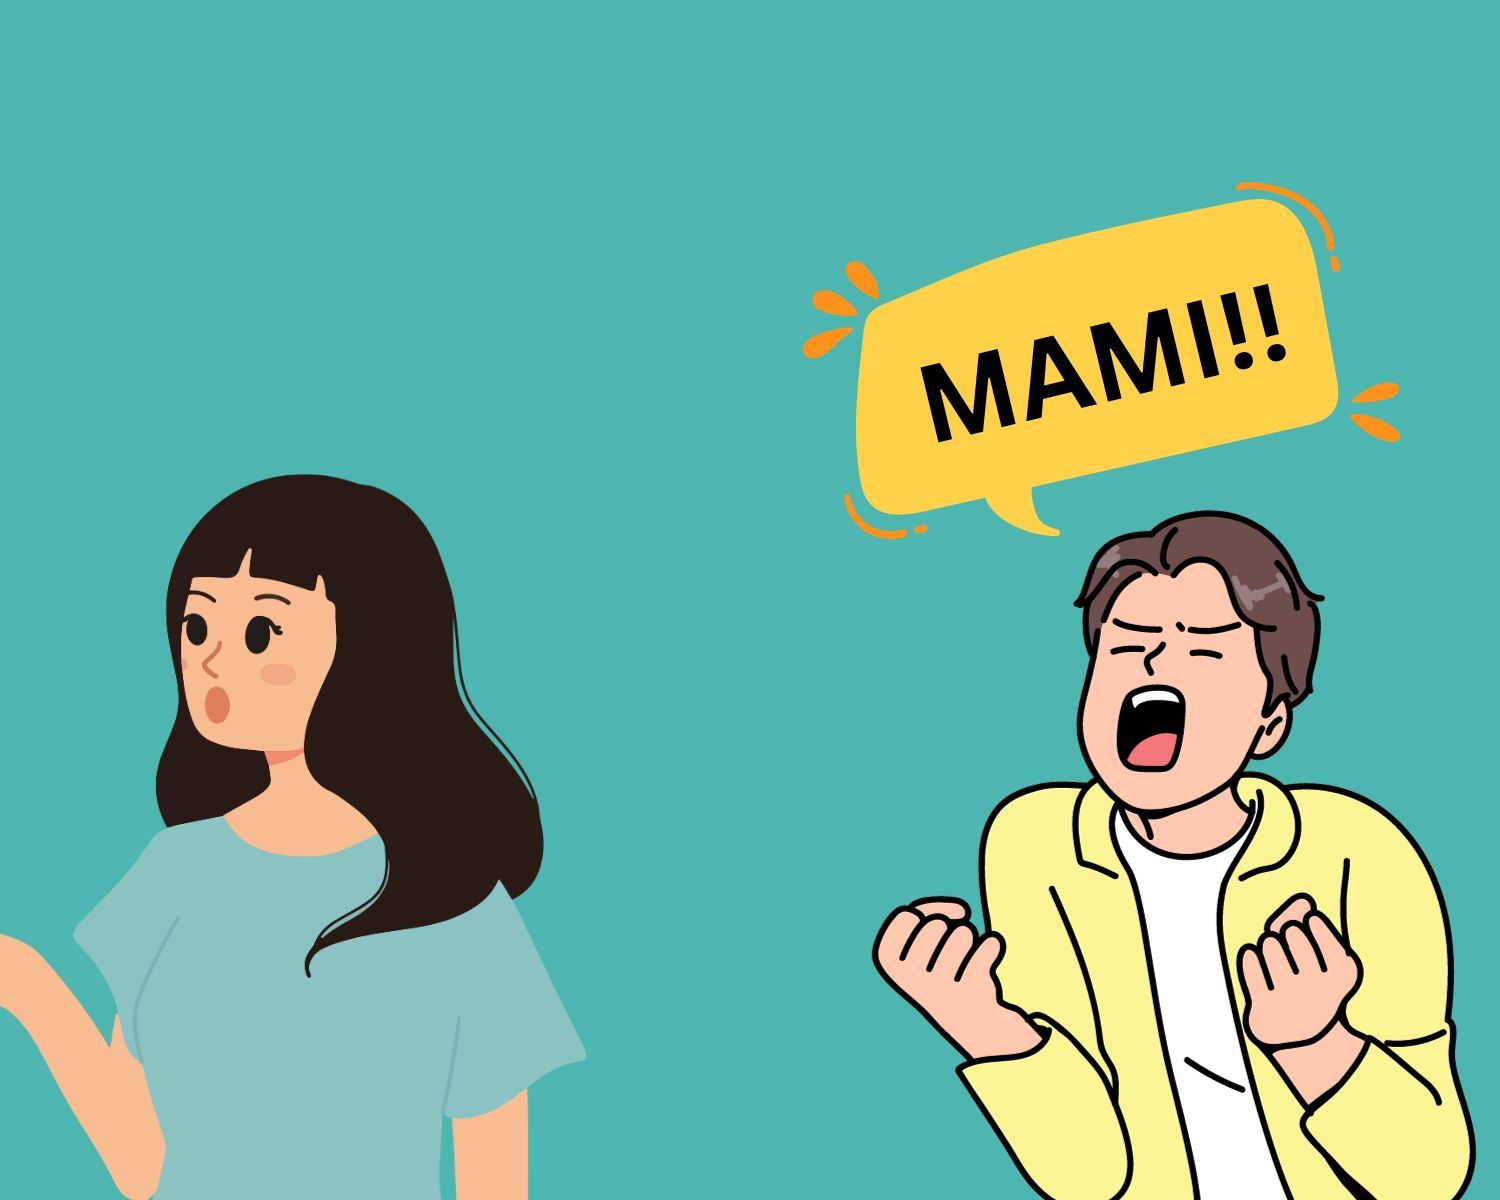 The Surprising Reason Spanish Guys Say “Mami”